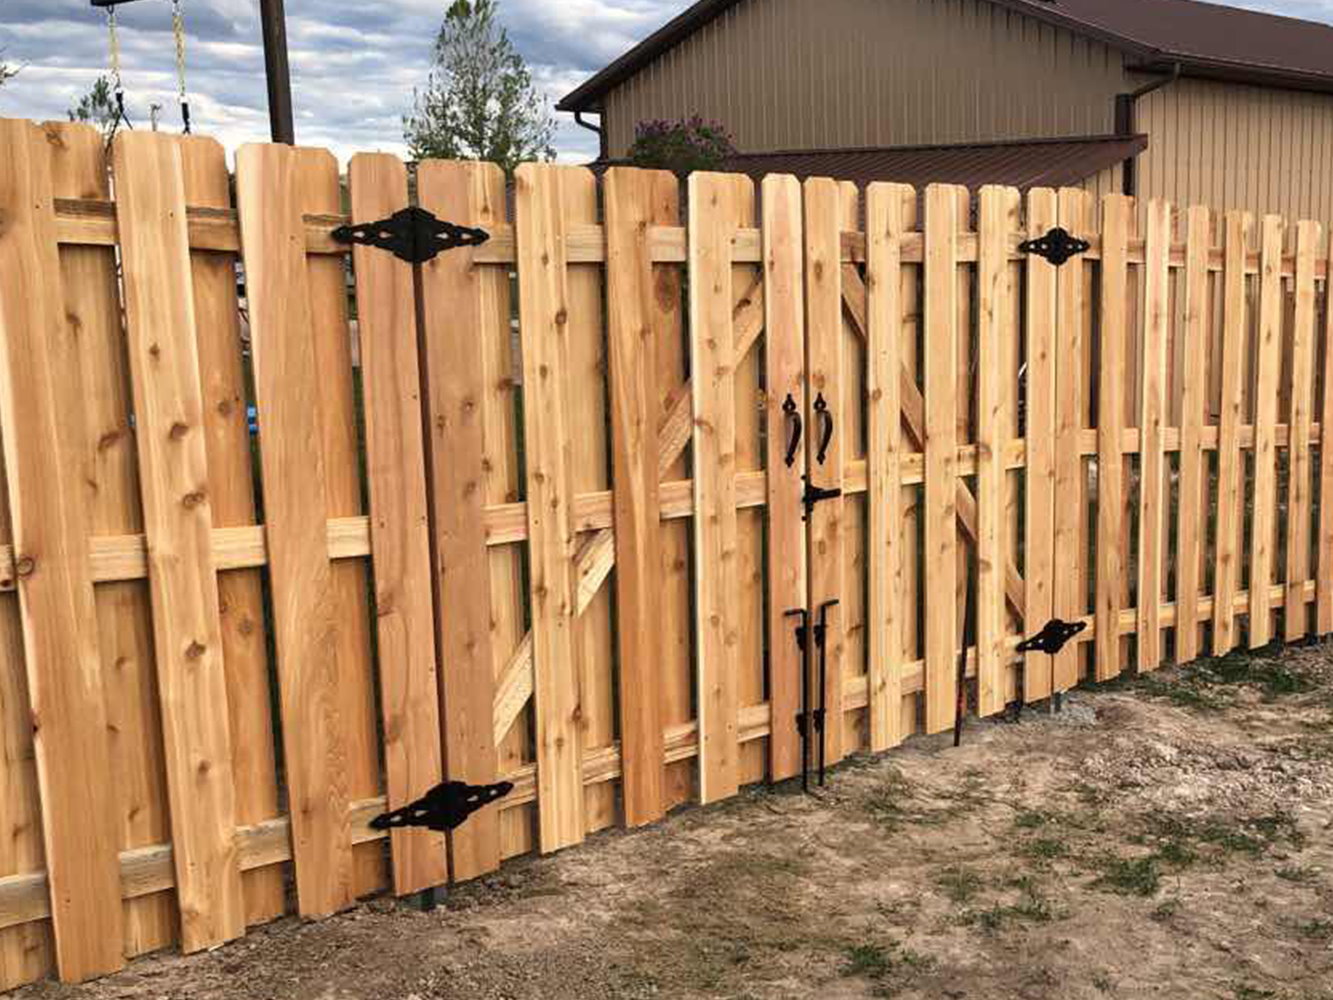 Ranchettes WY Shadowbox style wood fence